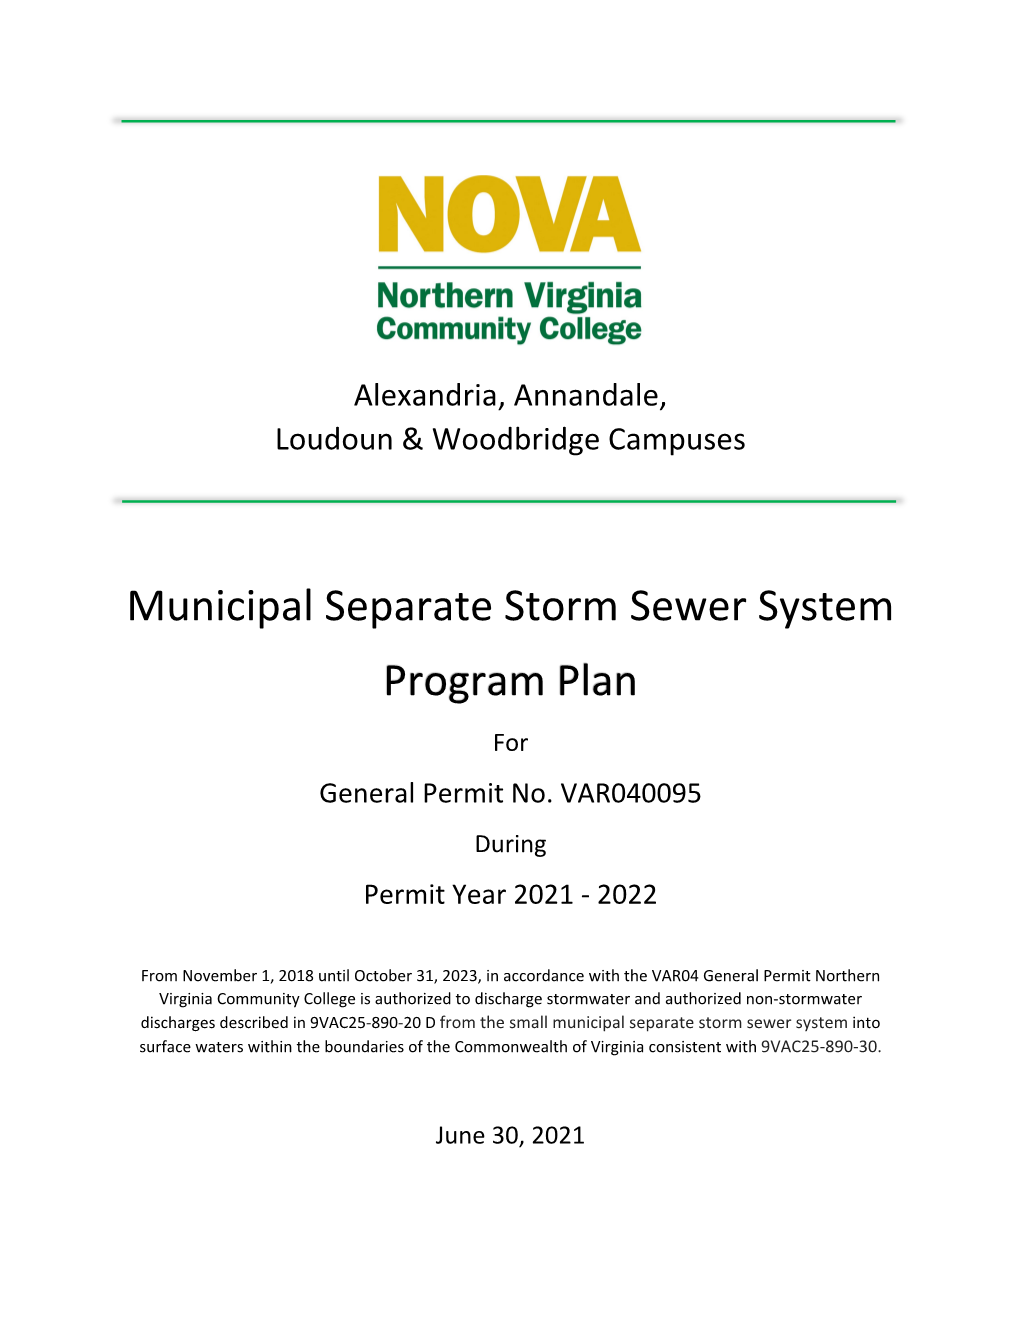 Municipal Separate Storm Sewer System Program Plan